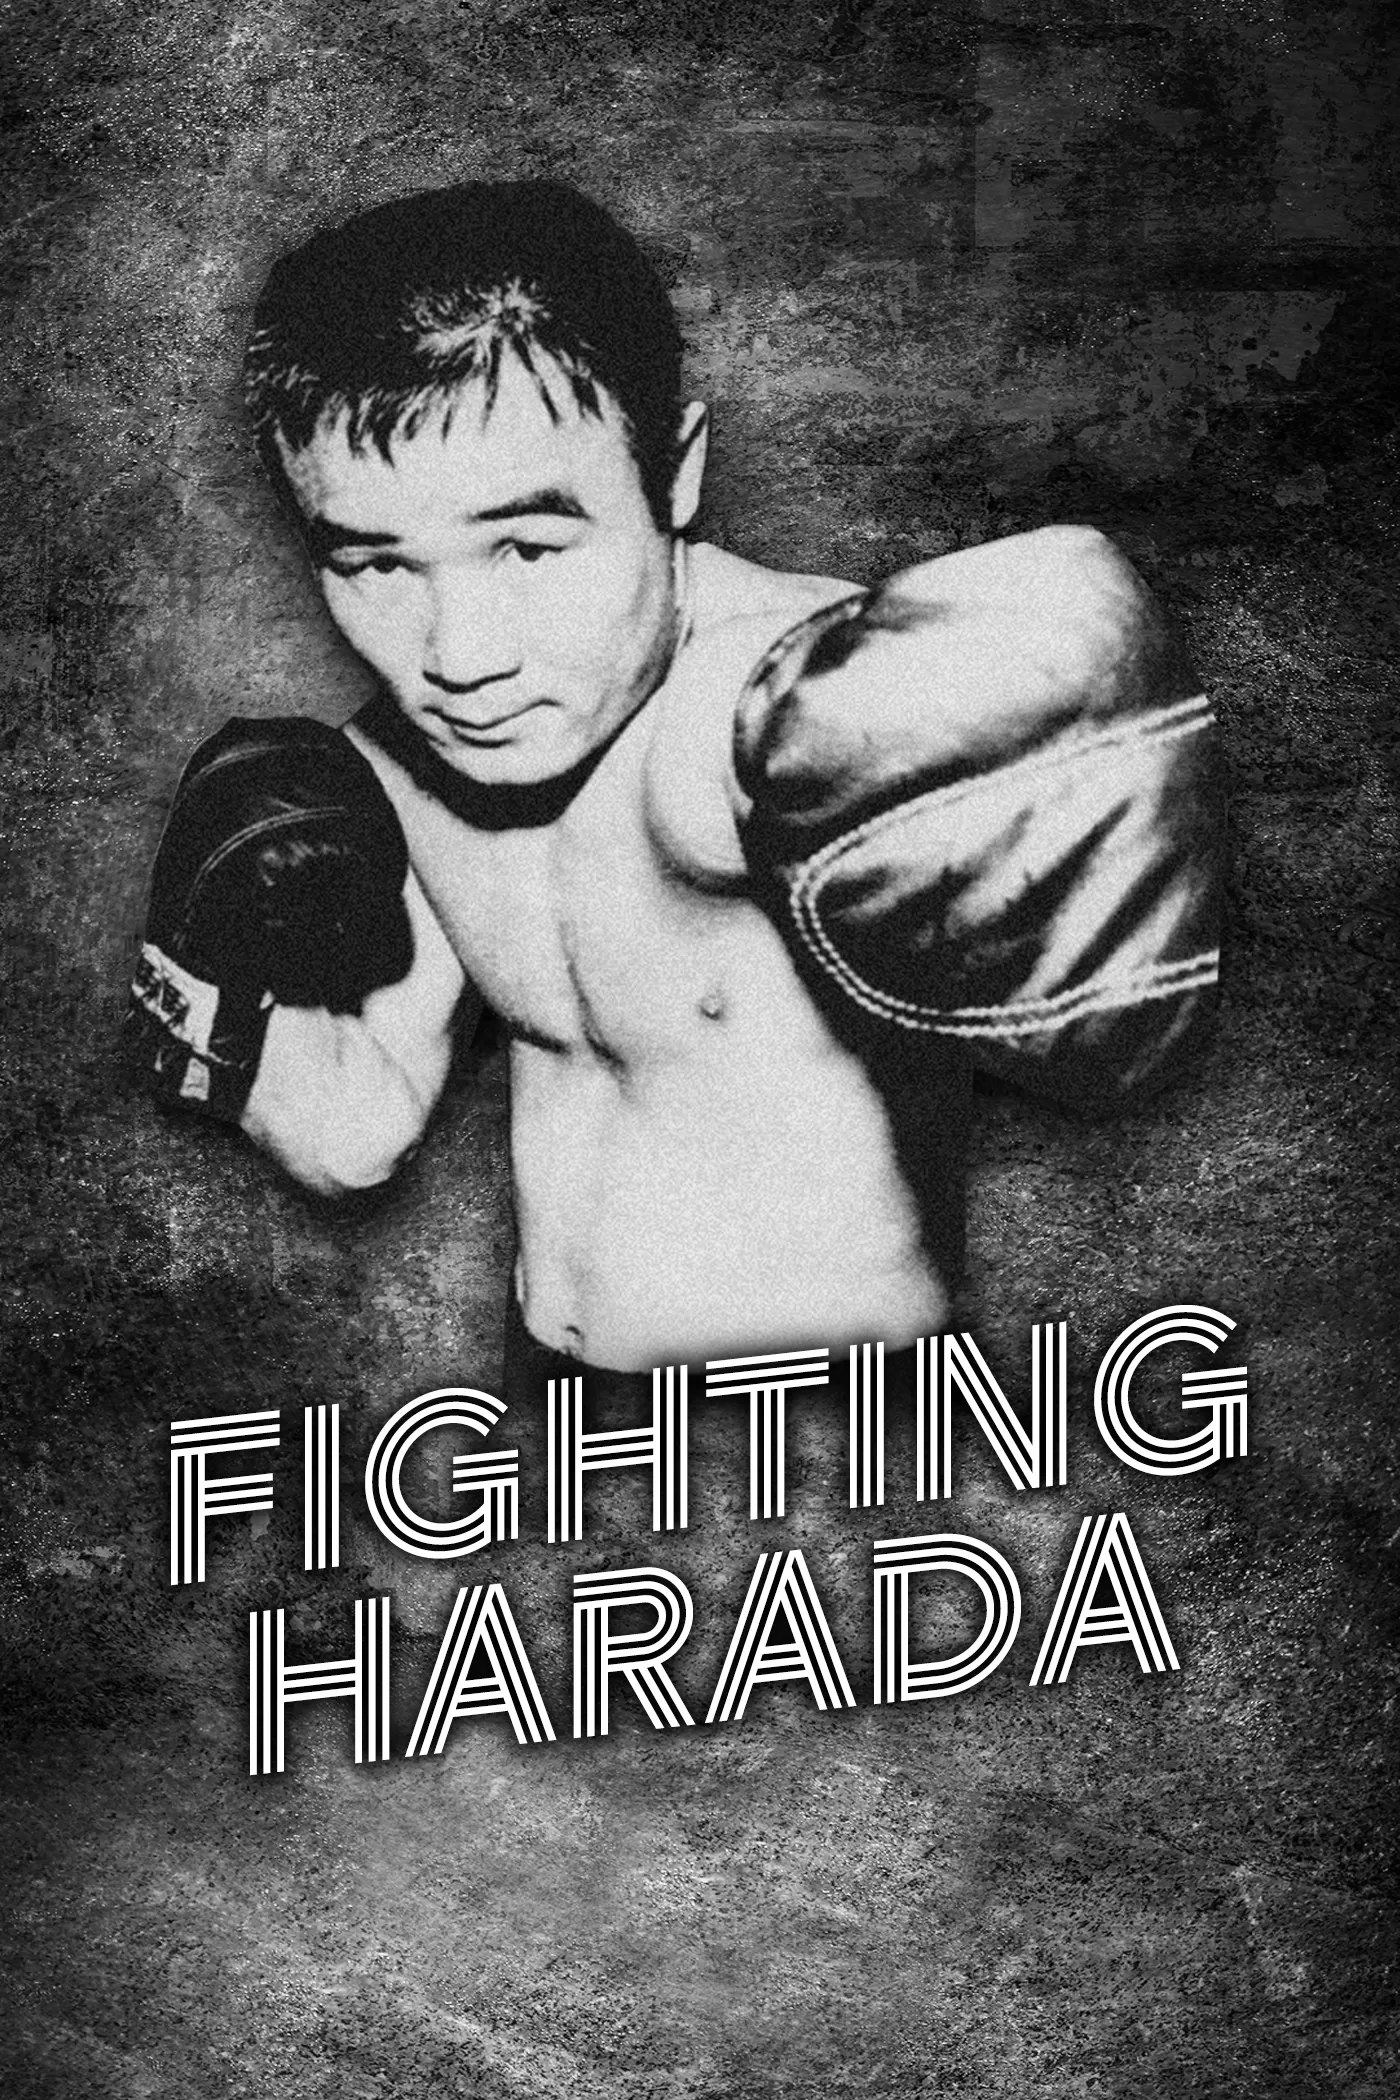 Fighting Harada